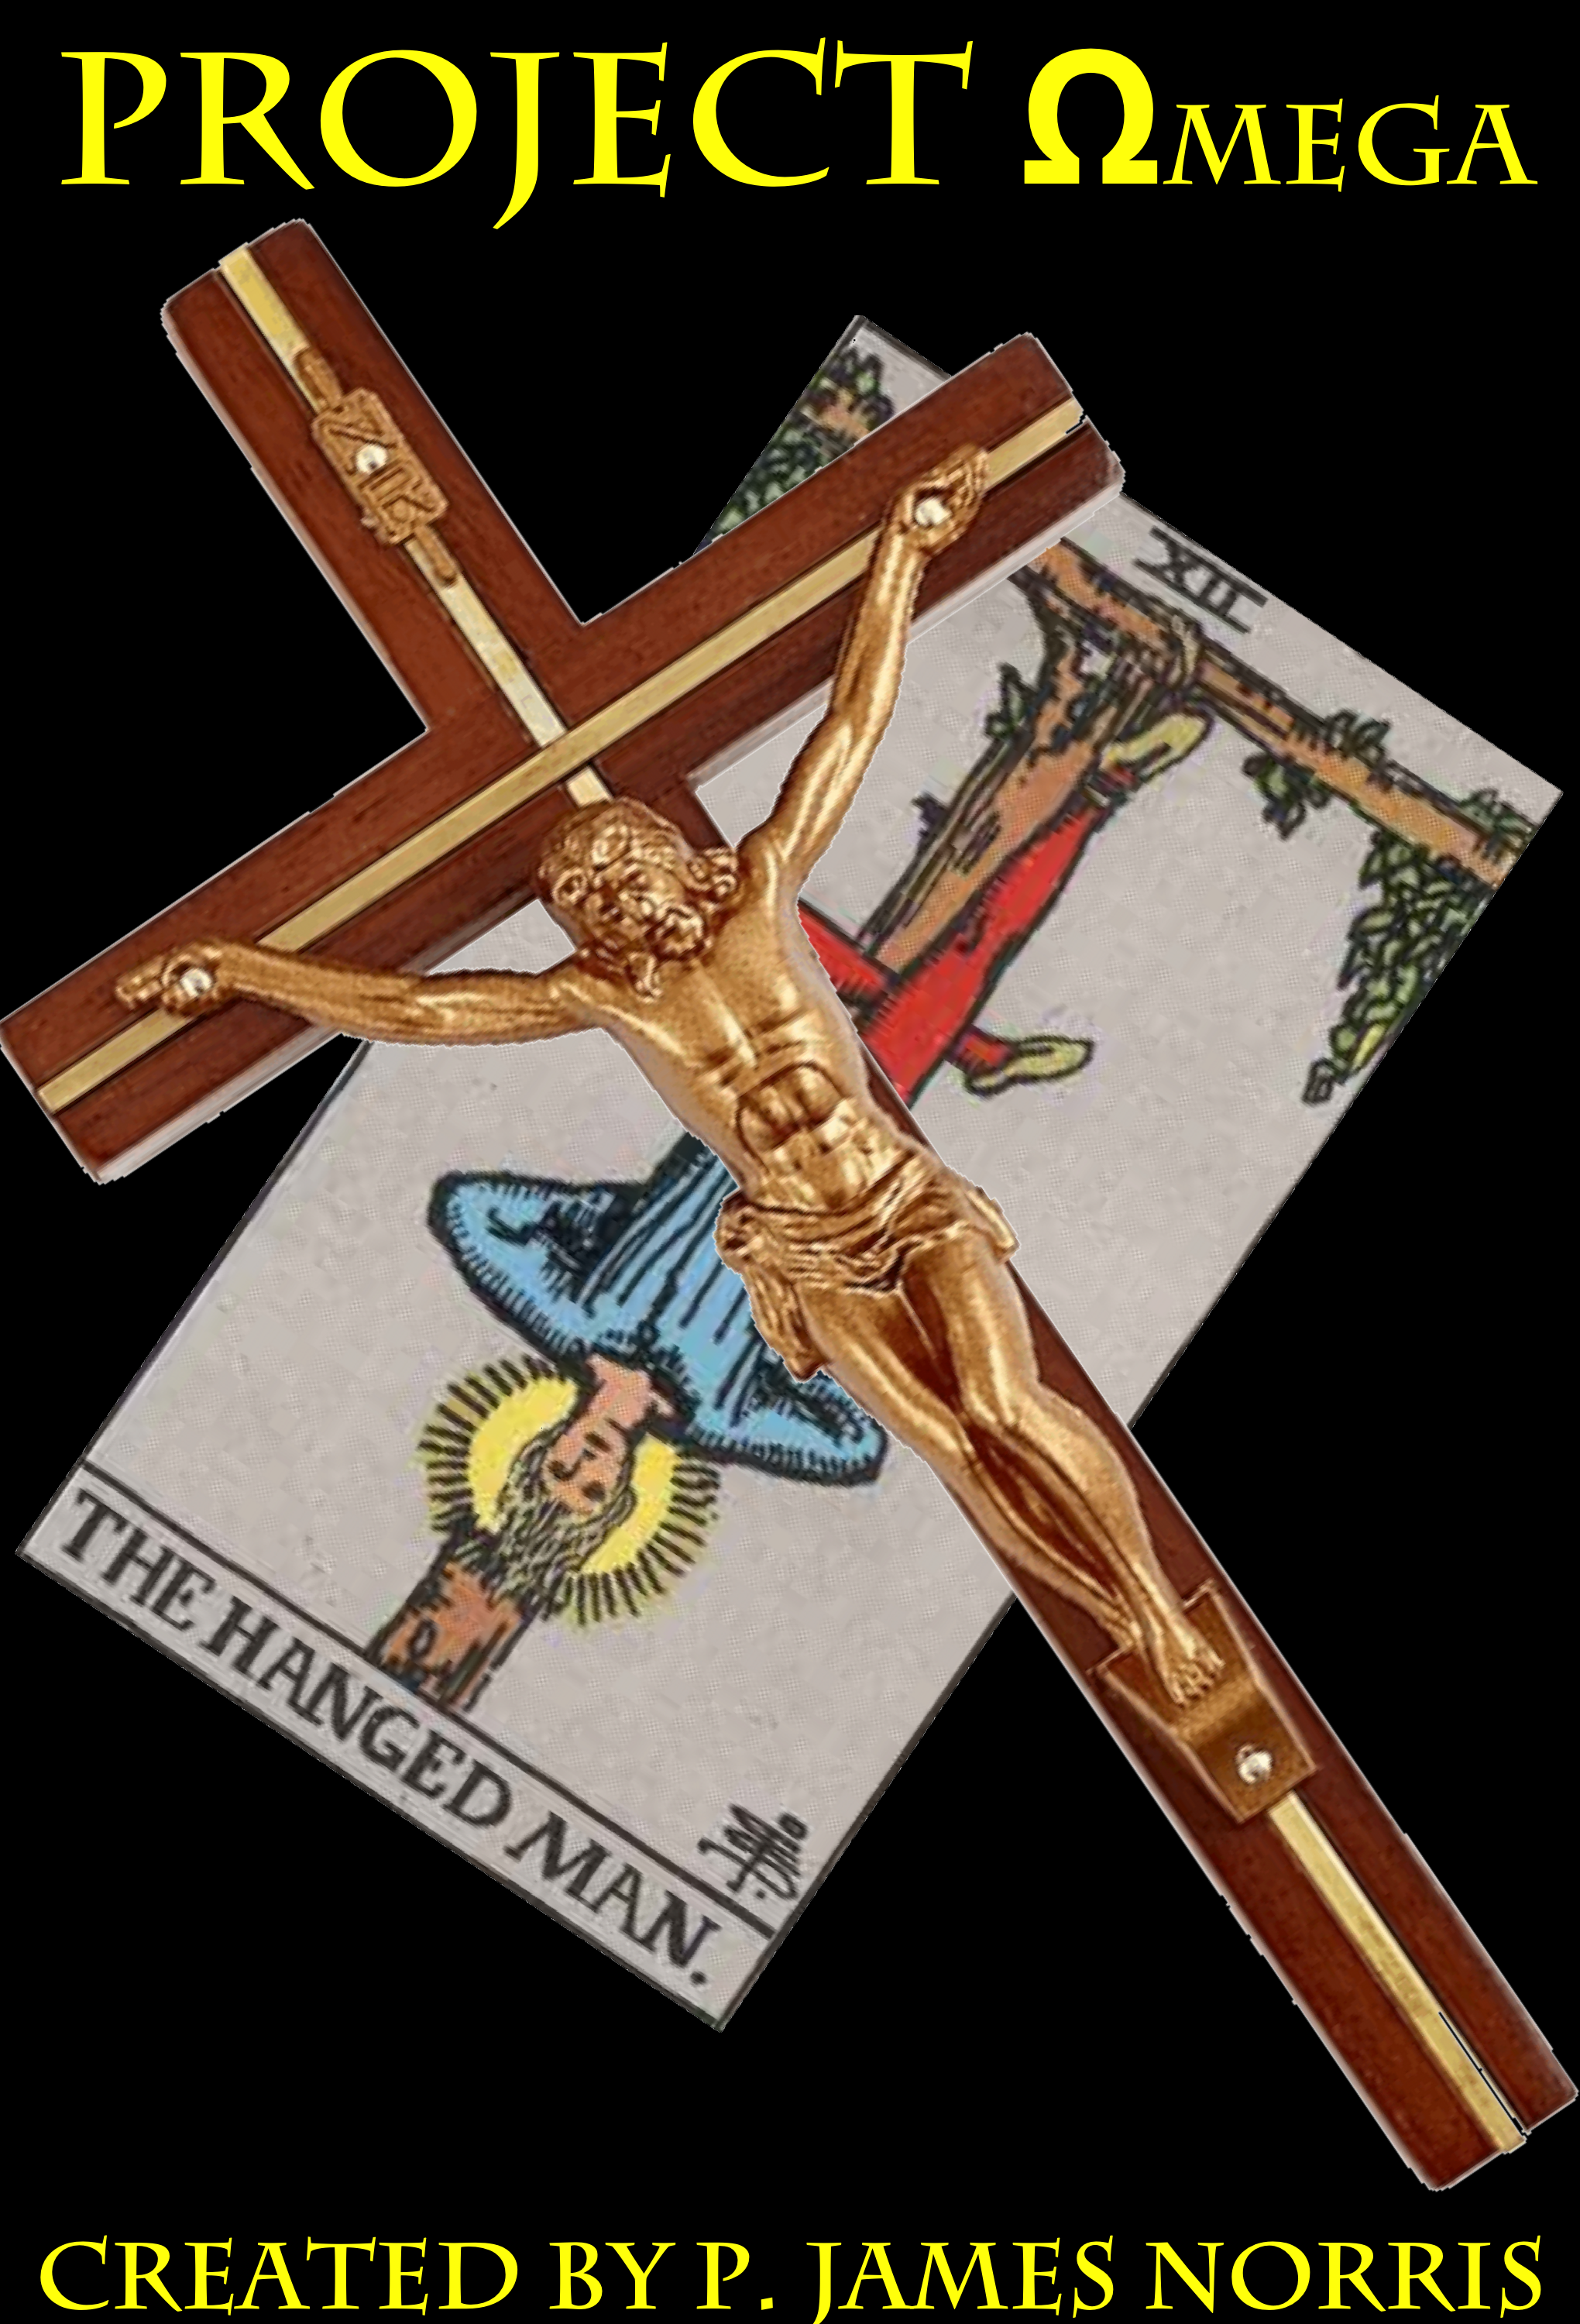 Crucifix over the Hanged Man tarot card